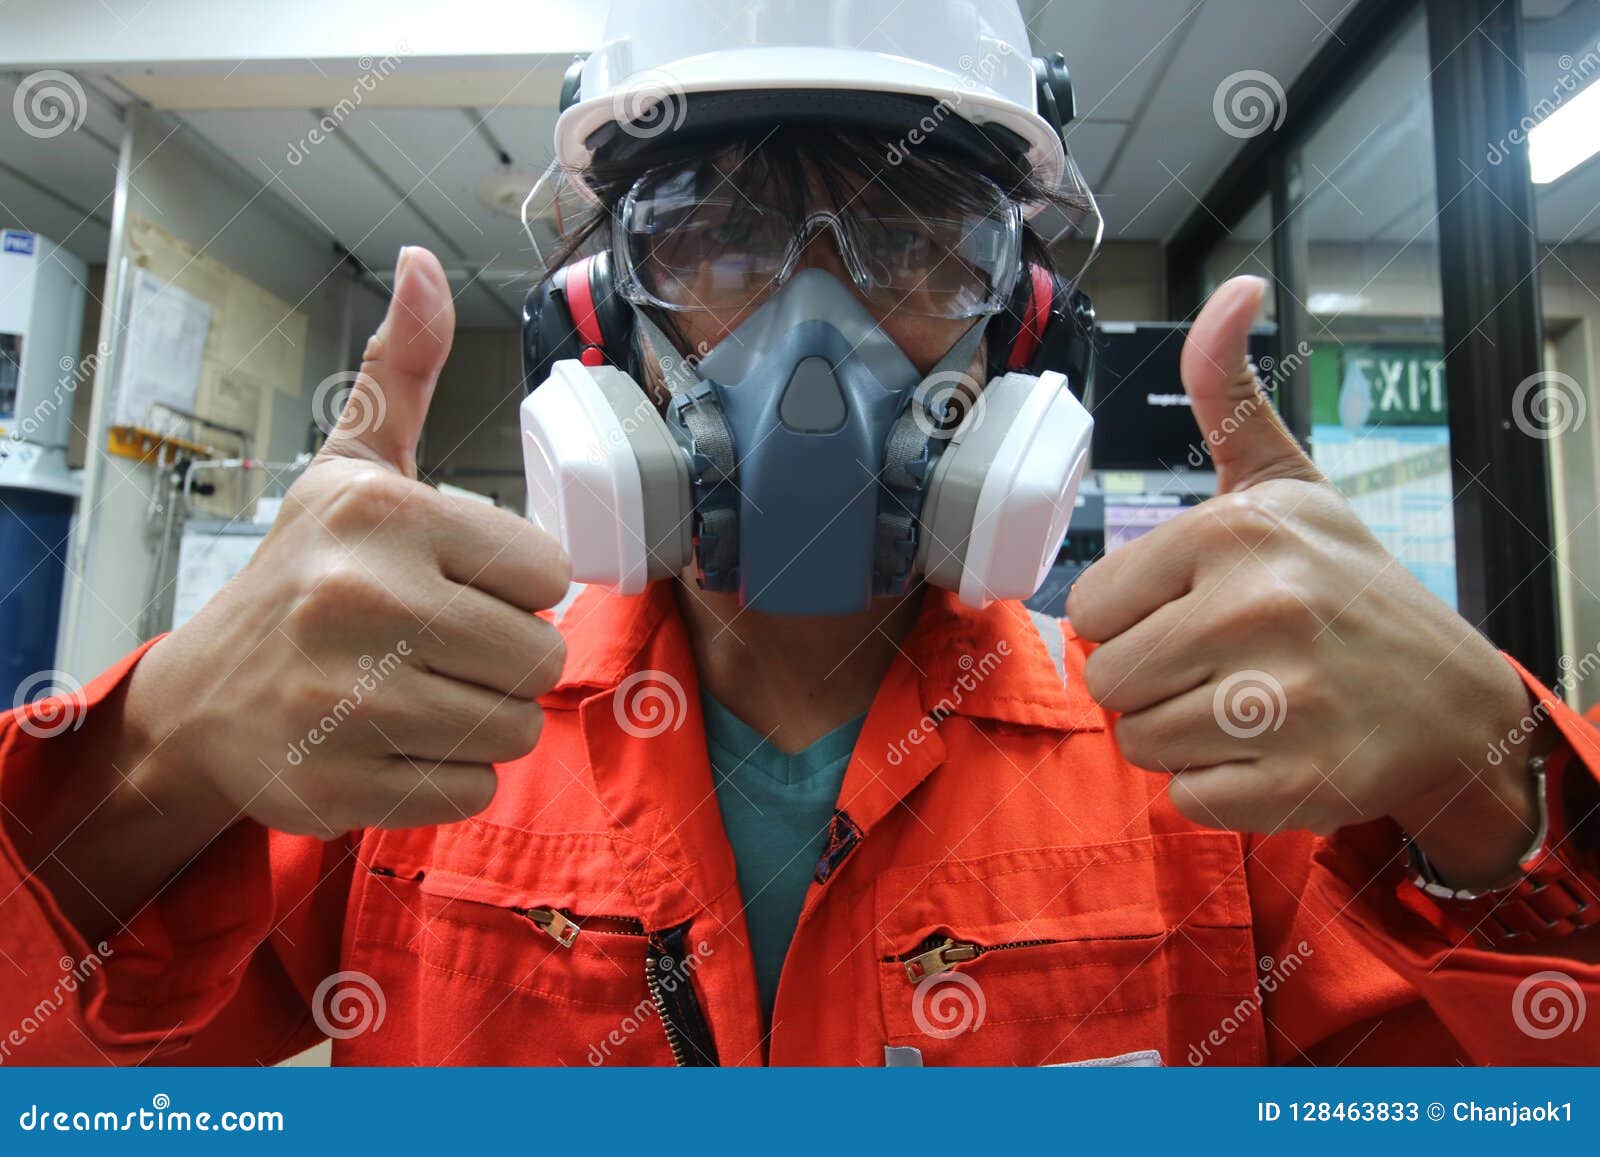 multi-purpose respirator half mask for toxic gas protection.